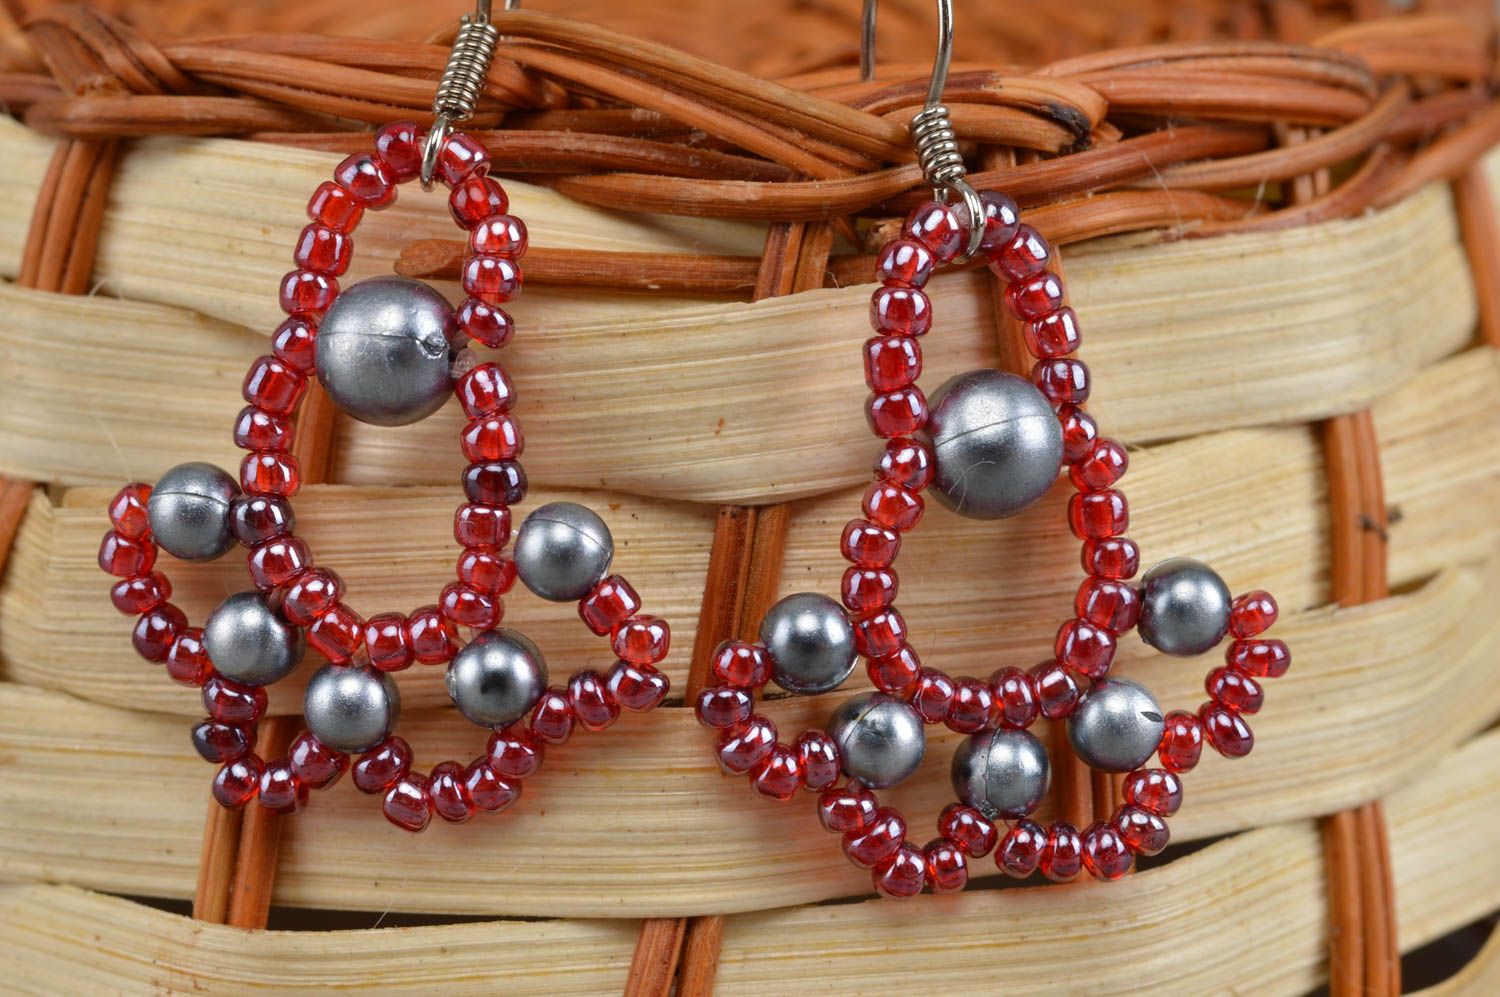 Large homemade beaded earrings evening jewelry designs bead weaving ideas photo 1